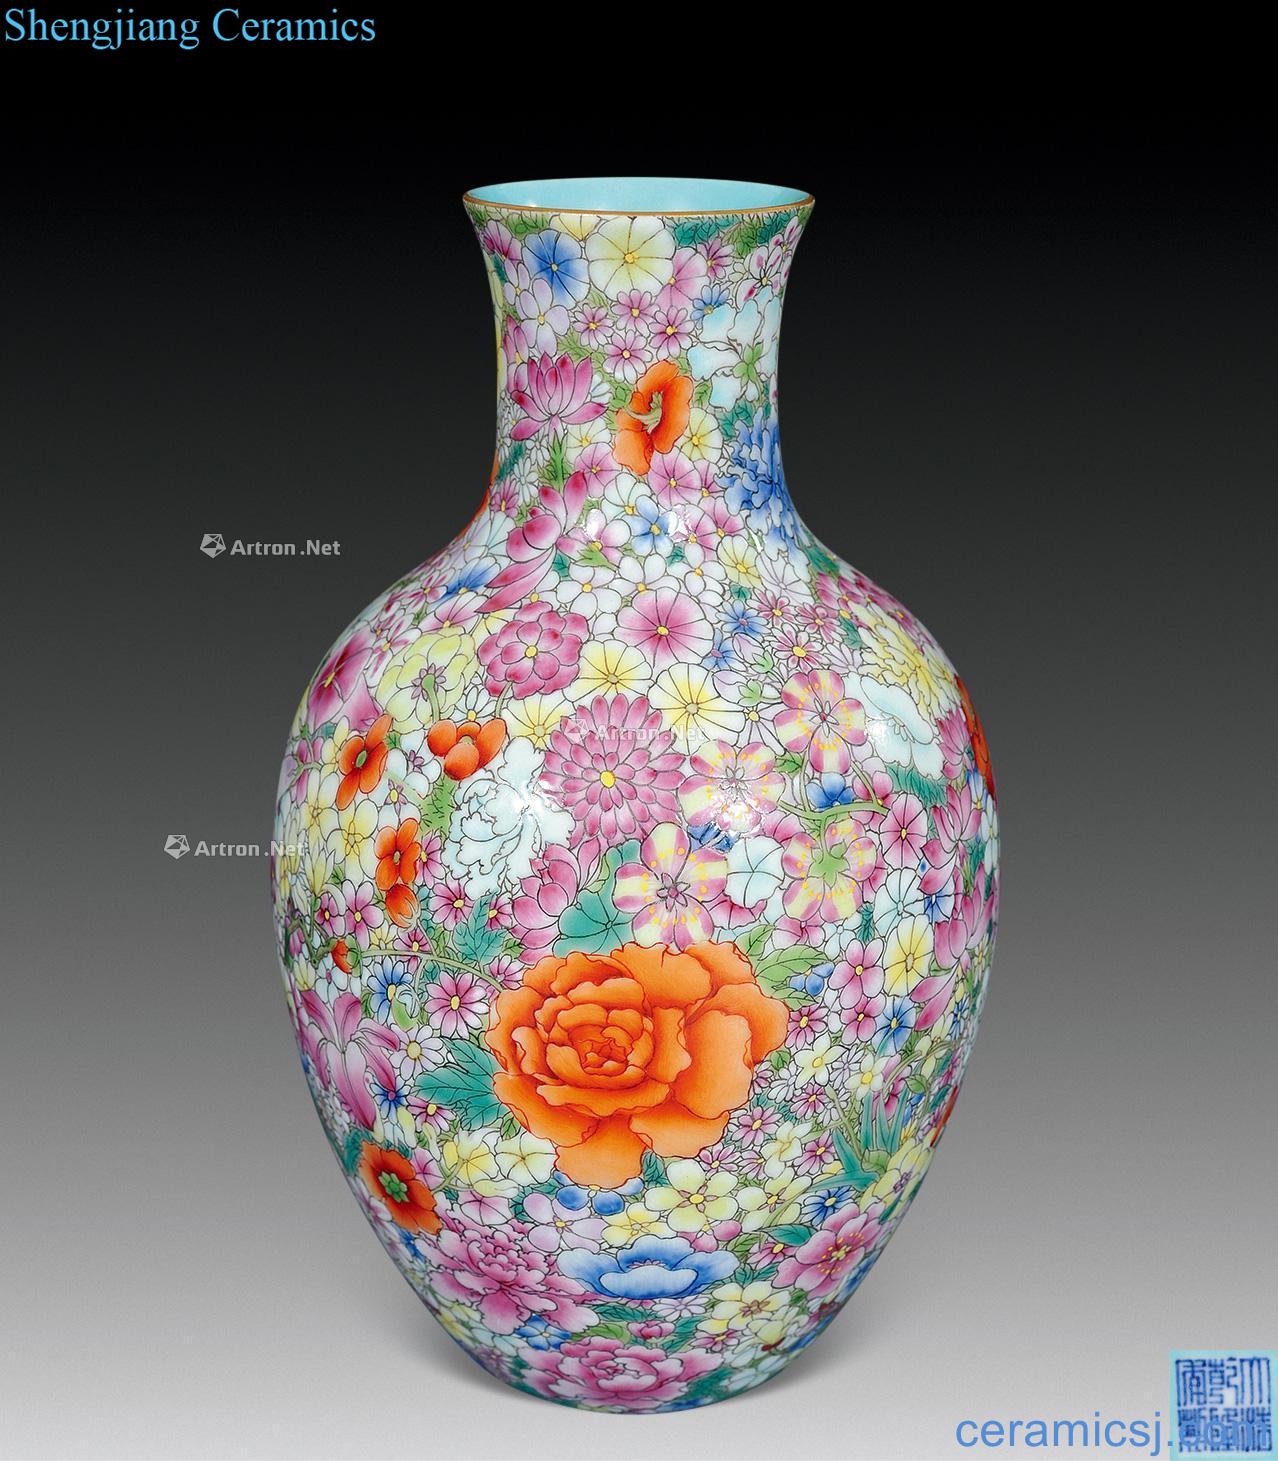 Qing dynasty vase pastel